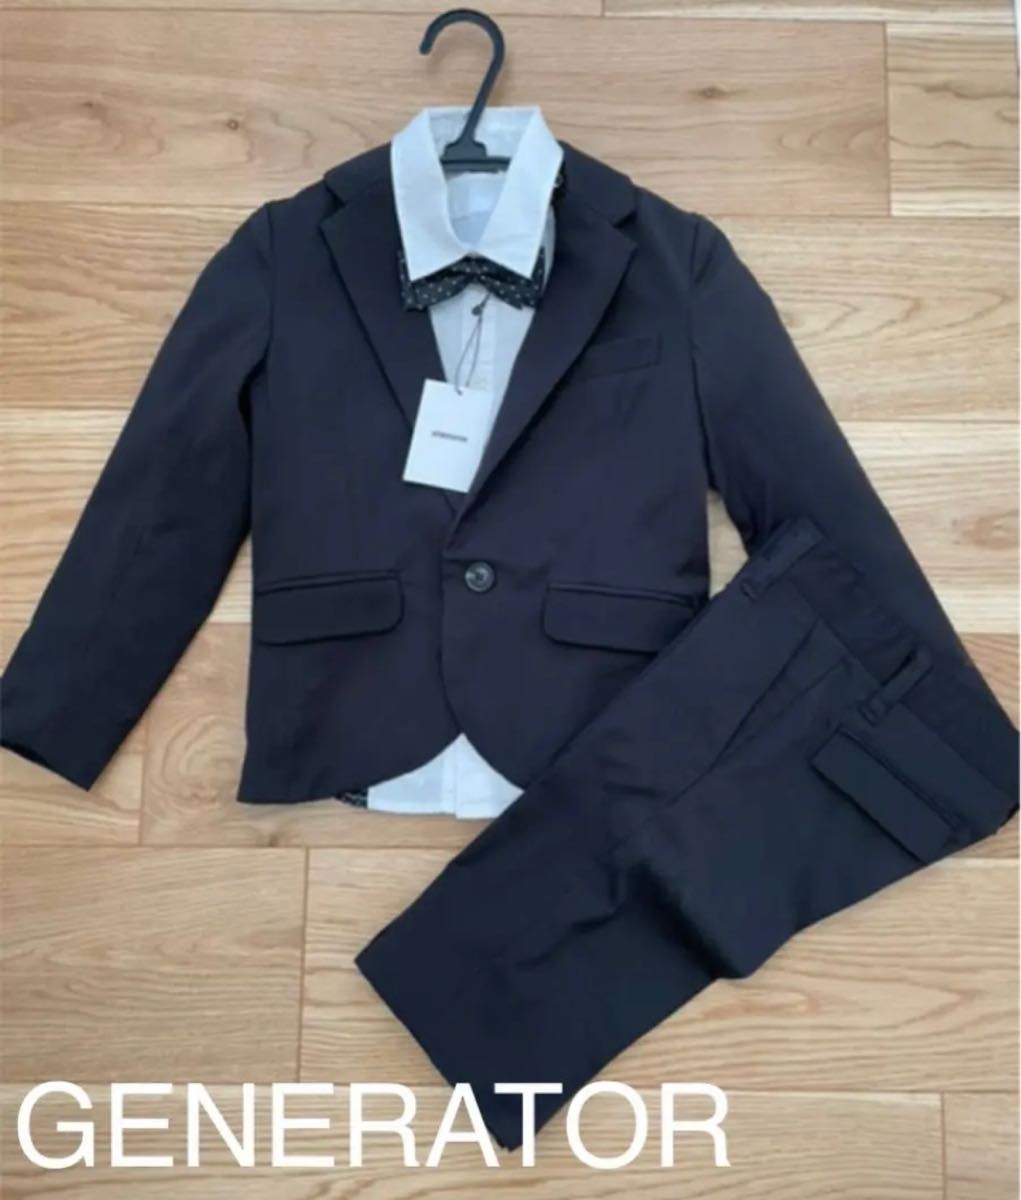 generator ジェネレーター 発表会 冠婚葬祭 スーツ セット Yahoo